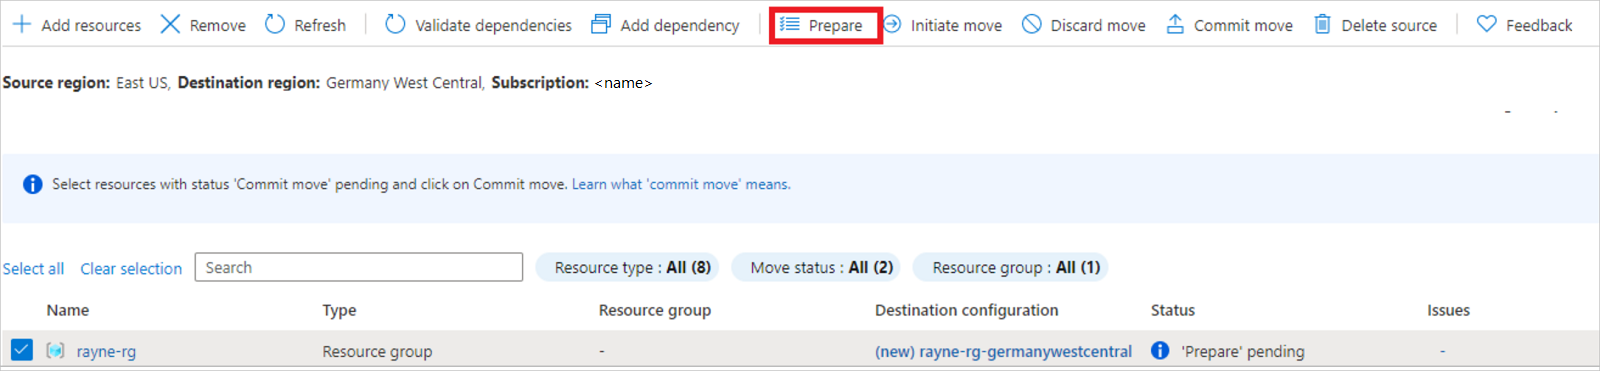 Screenshot of the 'Prepare' button on the 'Prepare resources' pane.